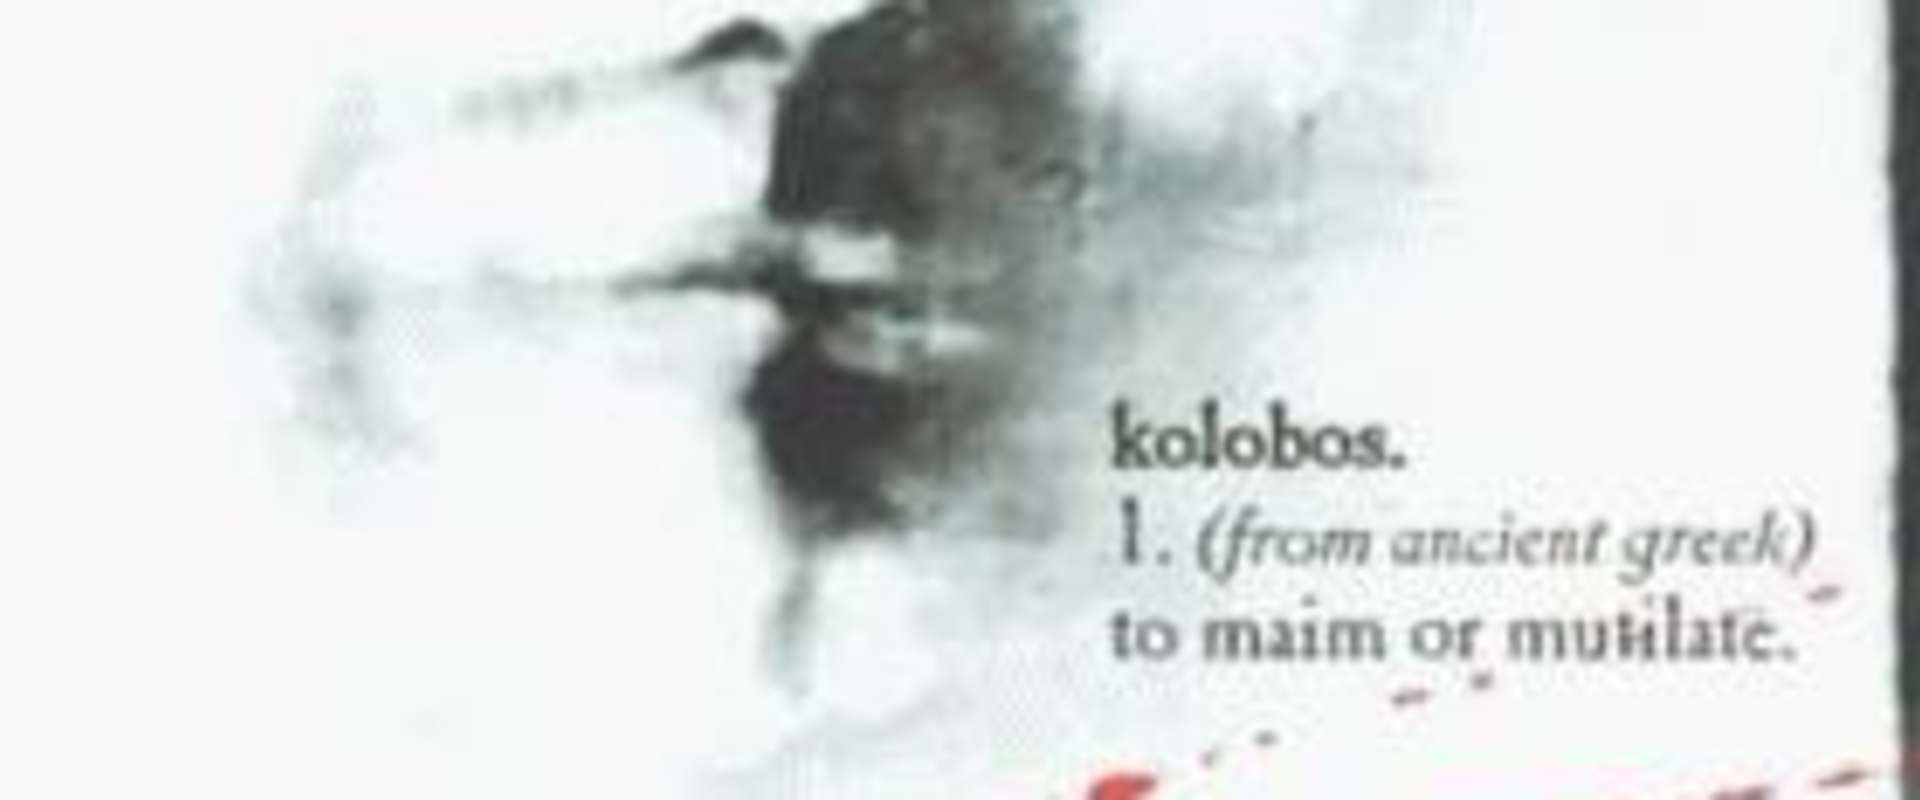 Kolobos background 1